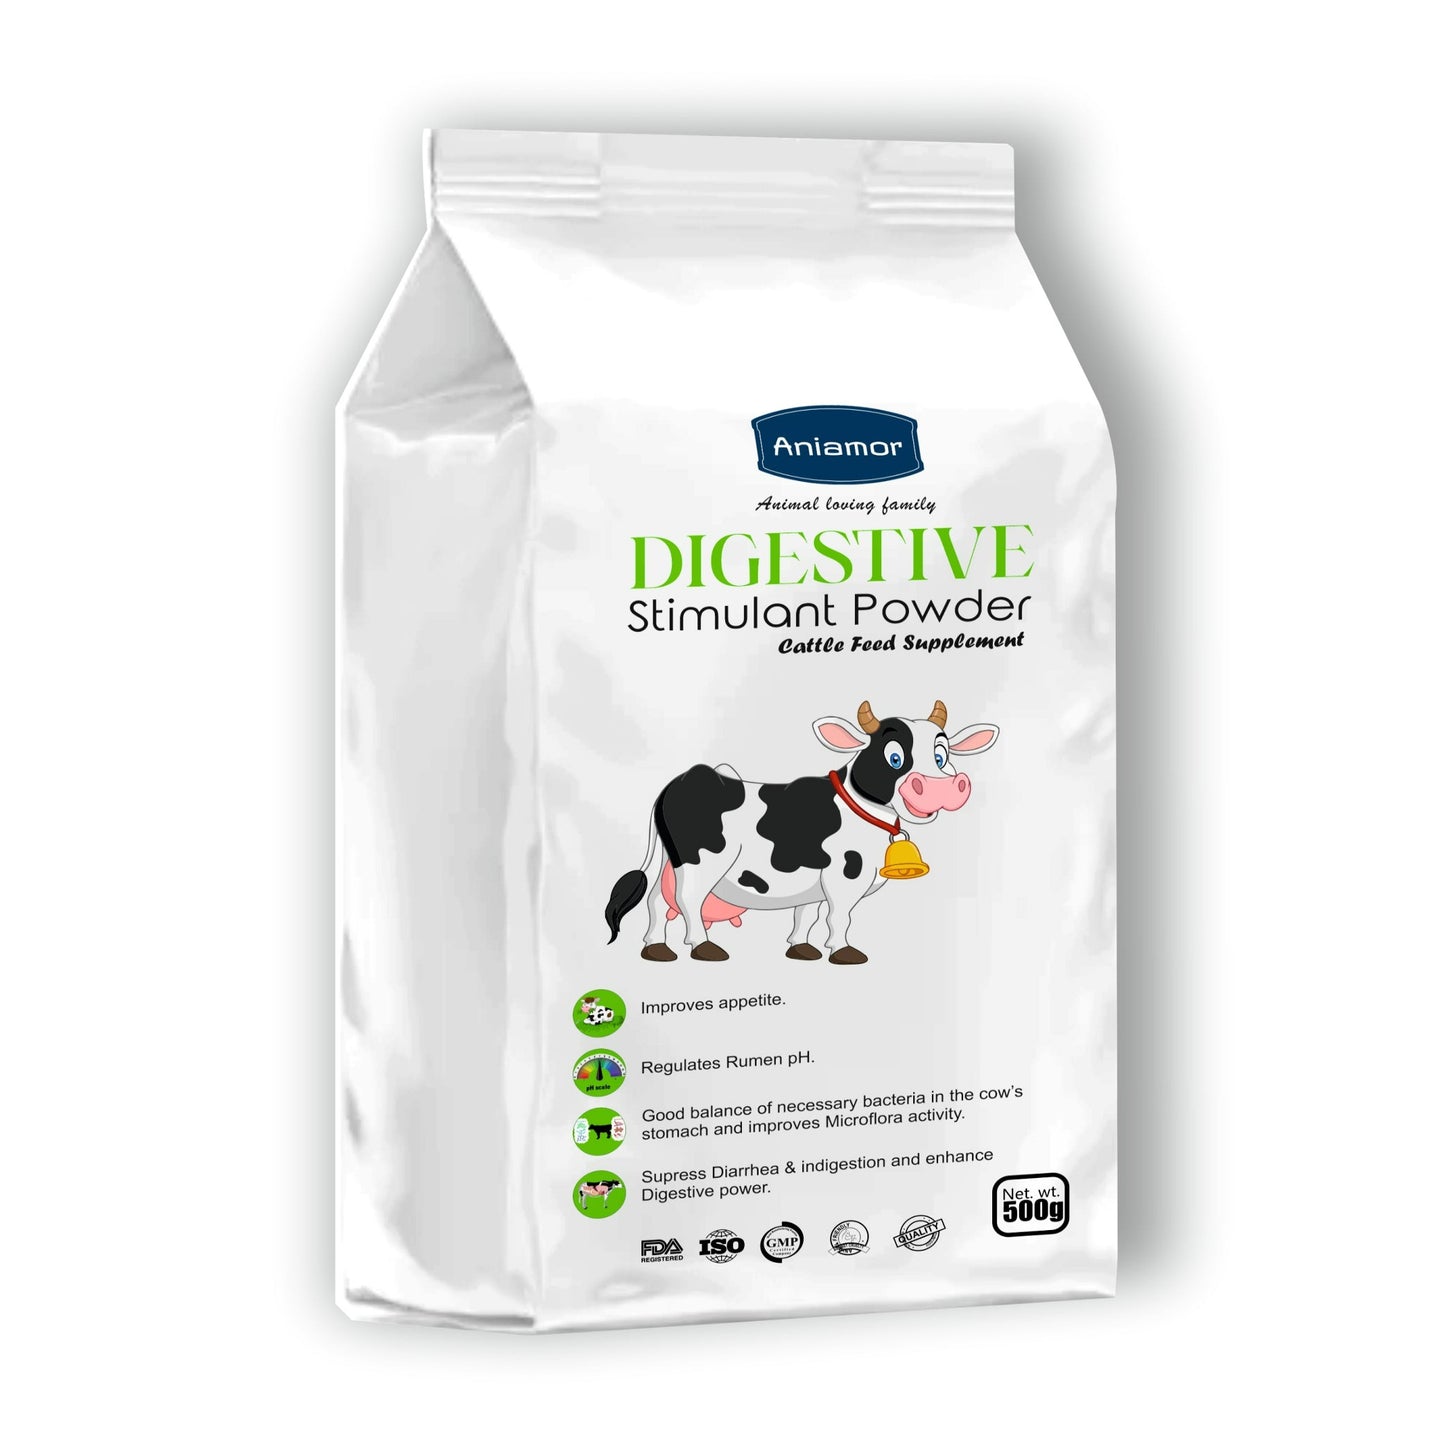 Digestive Stimulant Powder-Aniamor| Cattle Feed Supplement| 500g